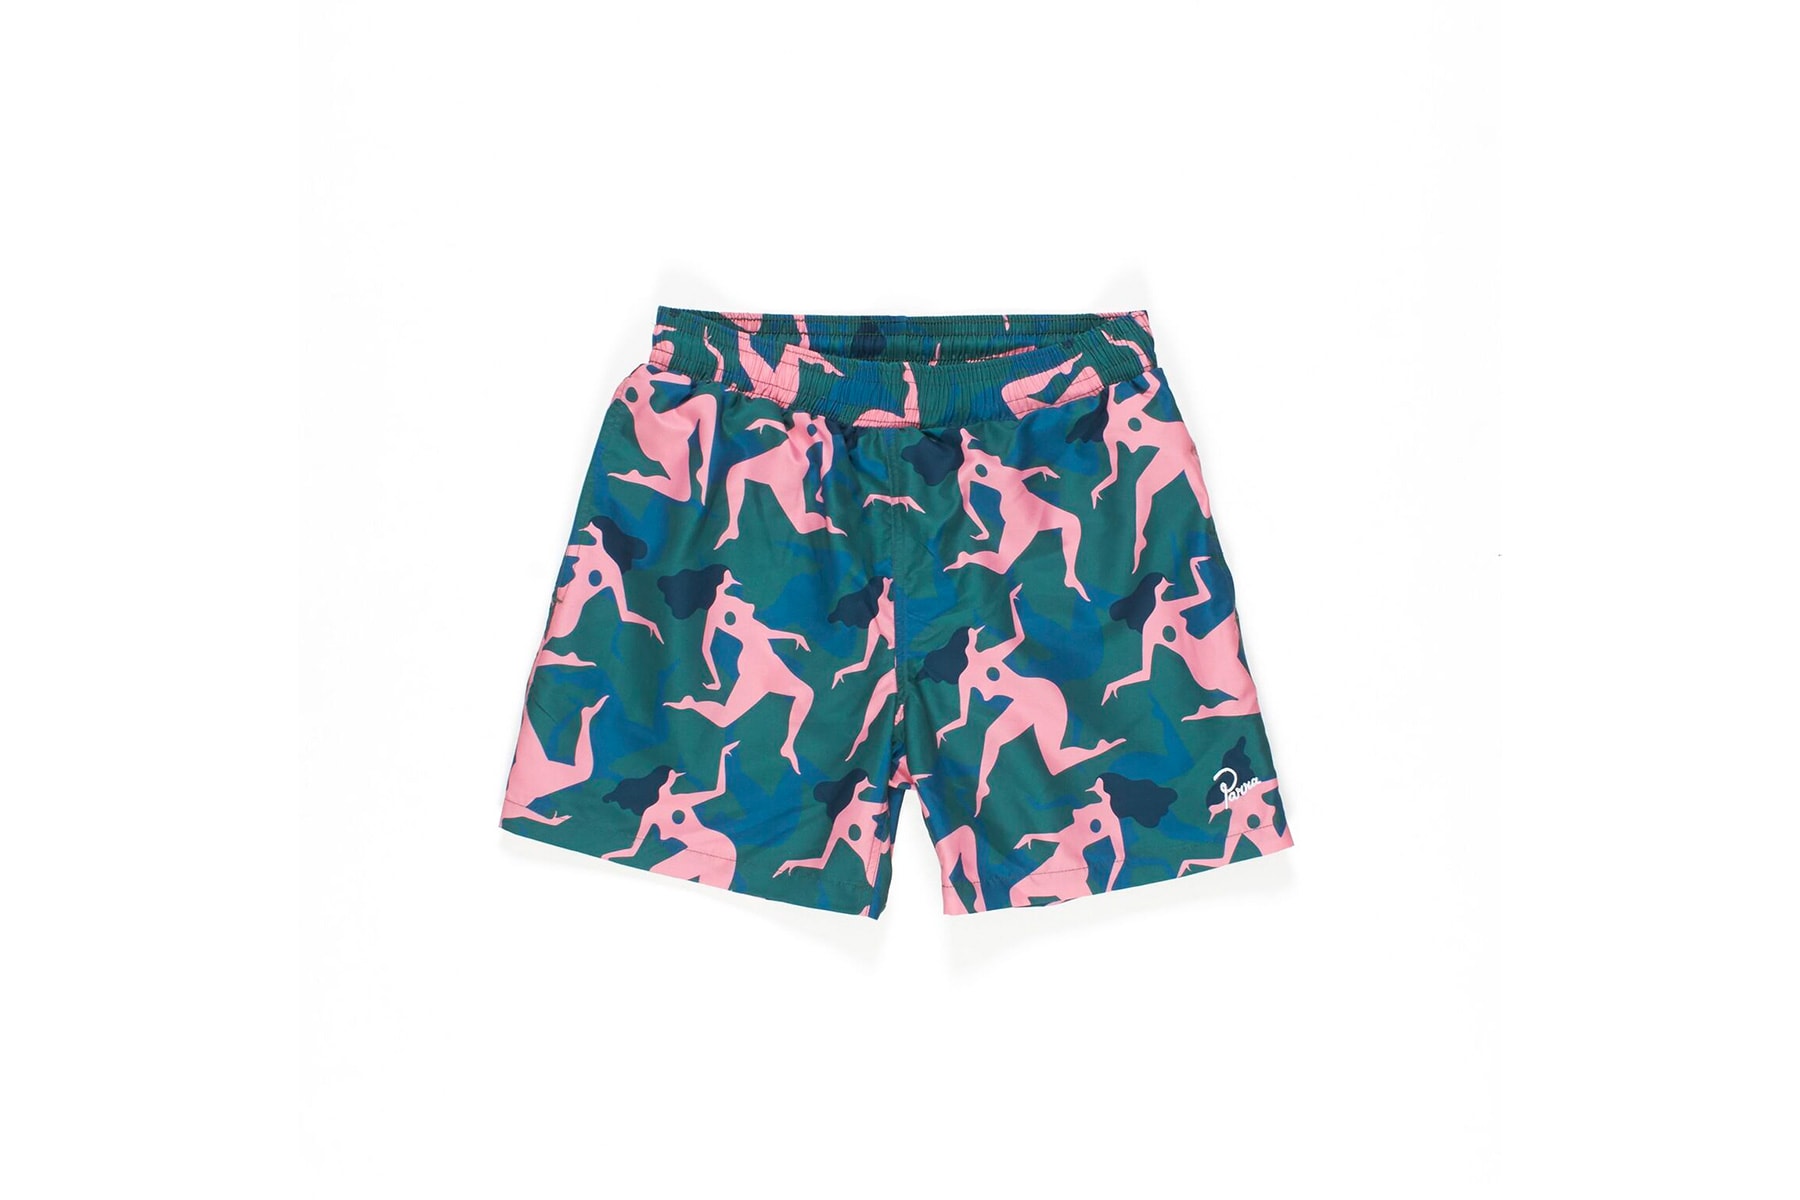 Parra Spring/Summer 2018 Collection Drop 3 & 4 waist pack swim trunks graphic t shirt hoodies caps